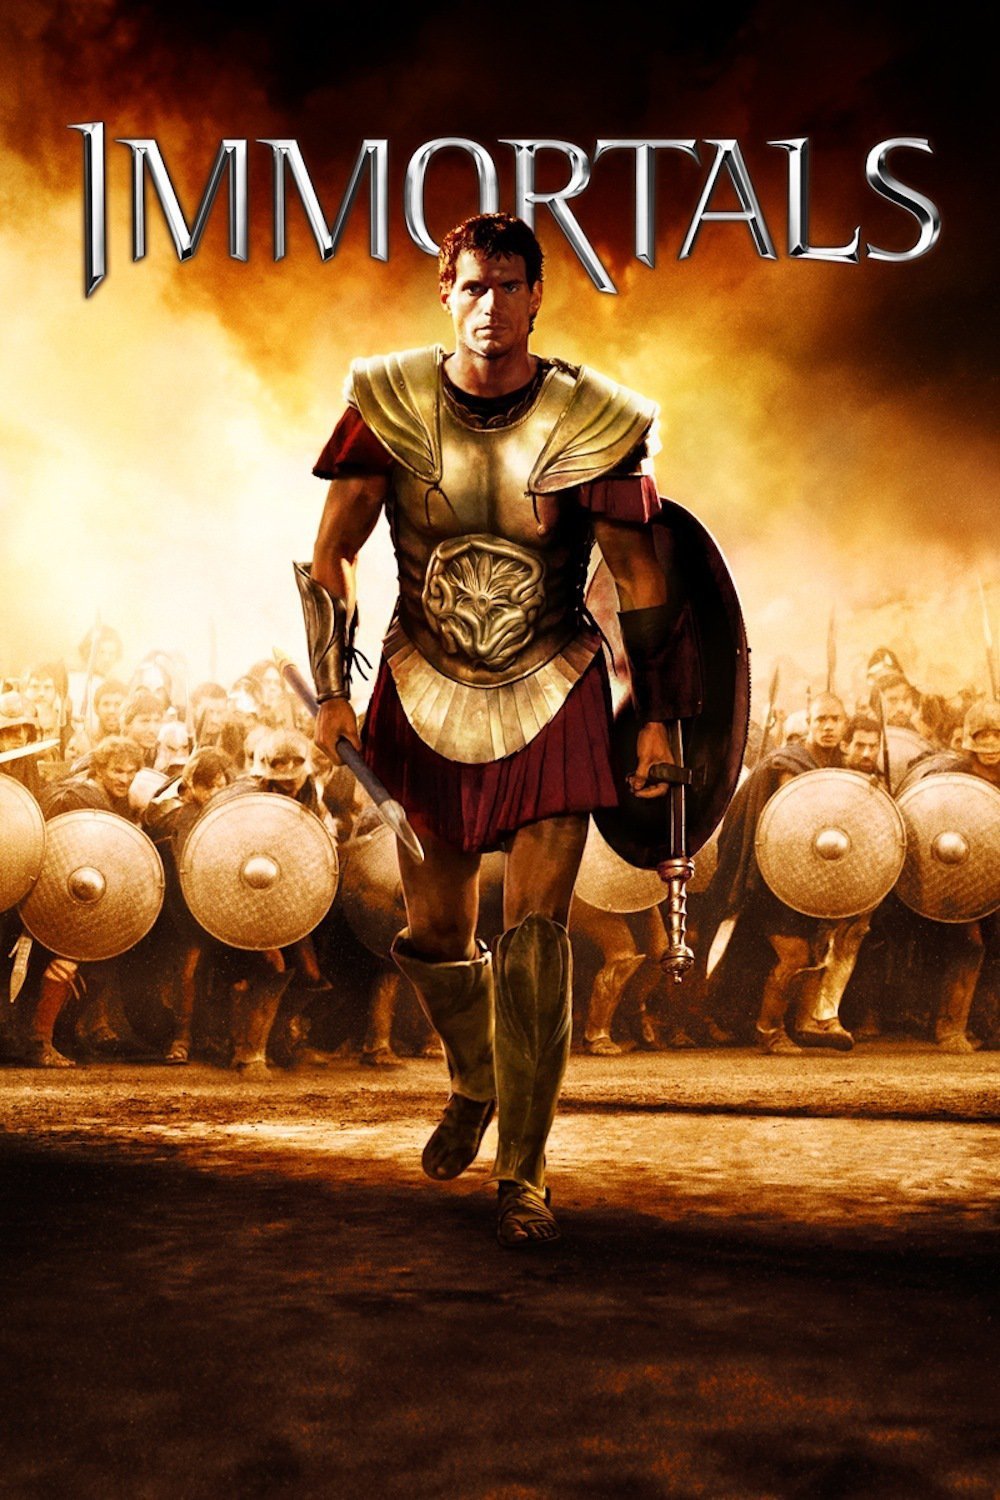 Watch The Gladiator Online Free